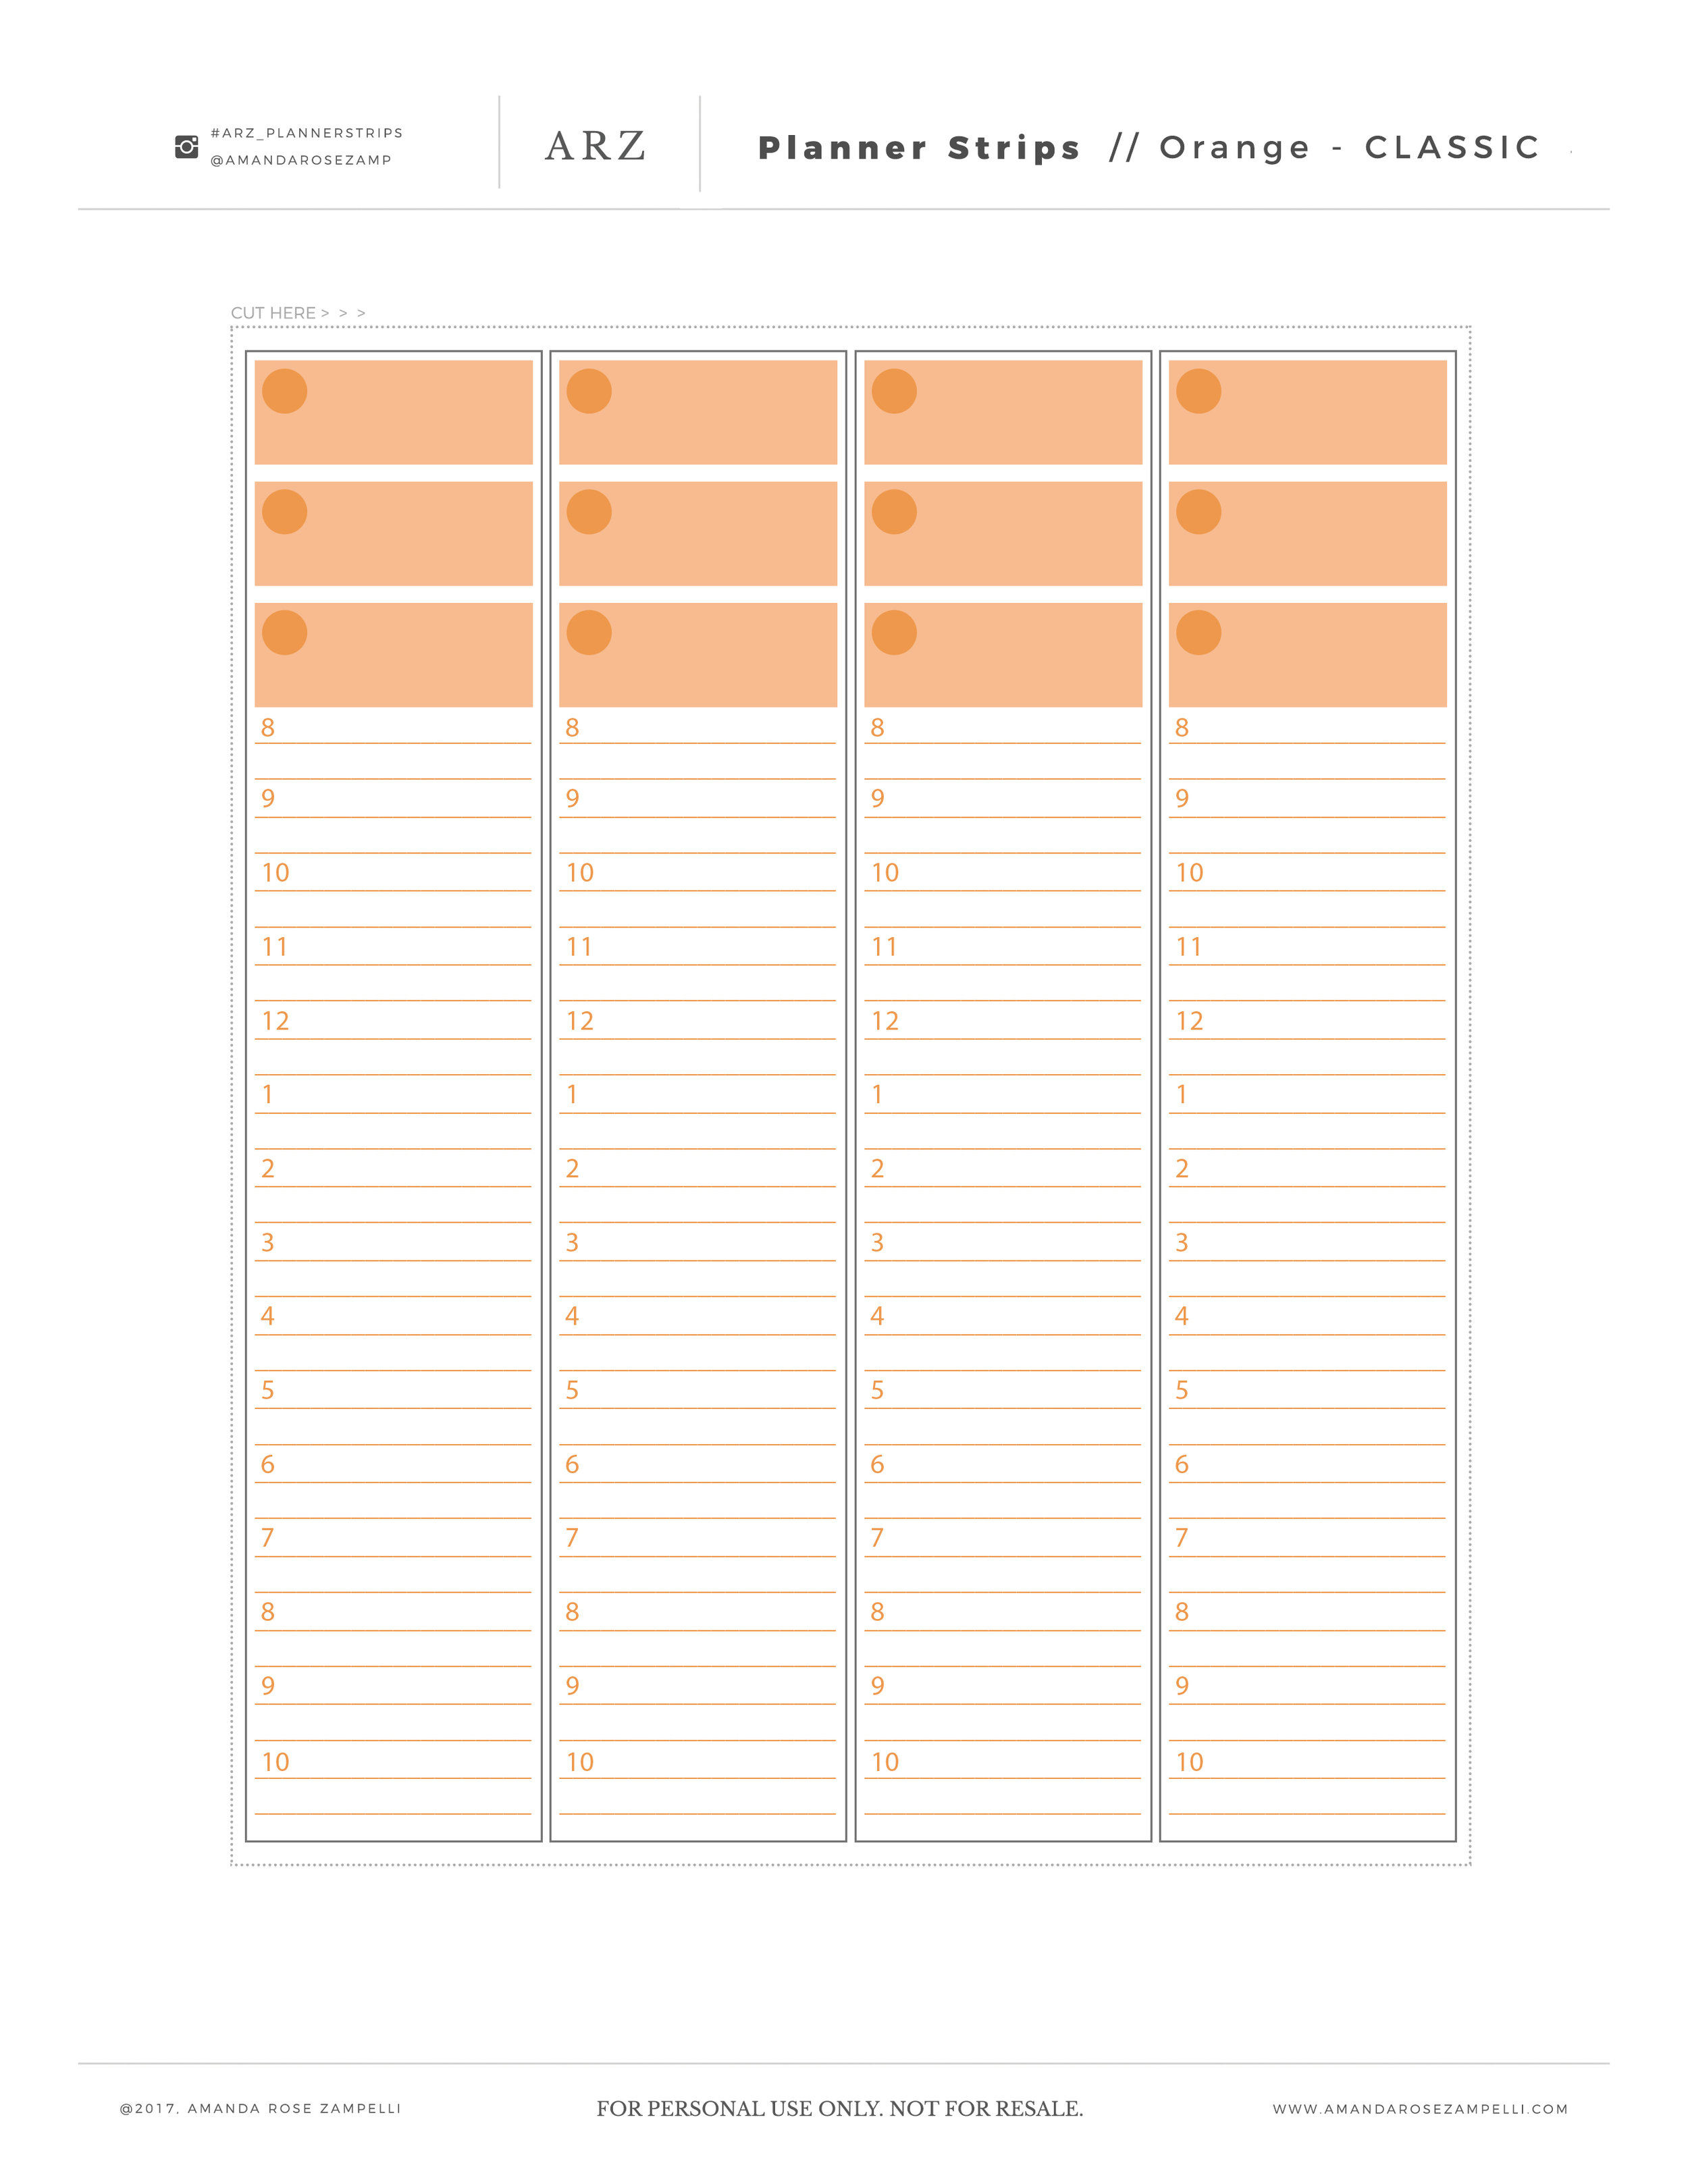 02 CLASSIC orange TH - SN planner strips.jpg